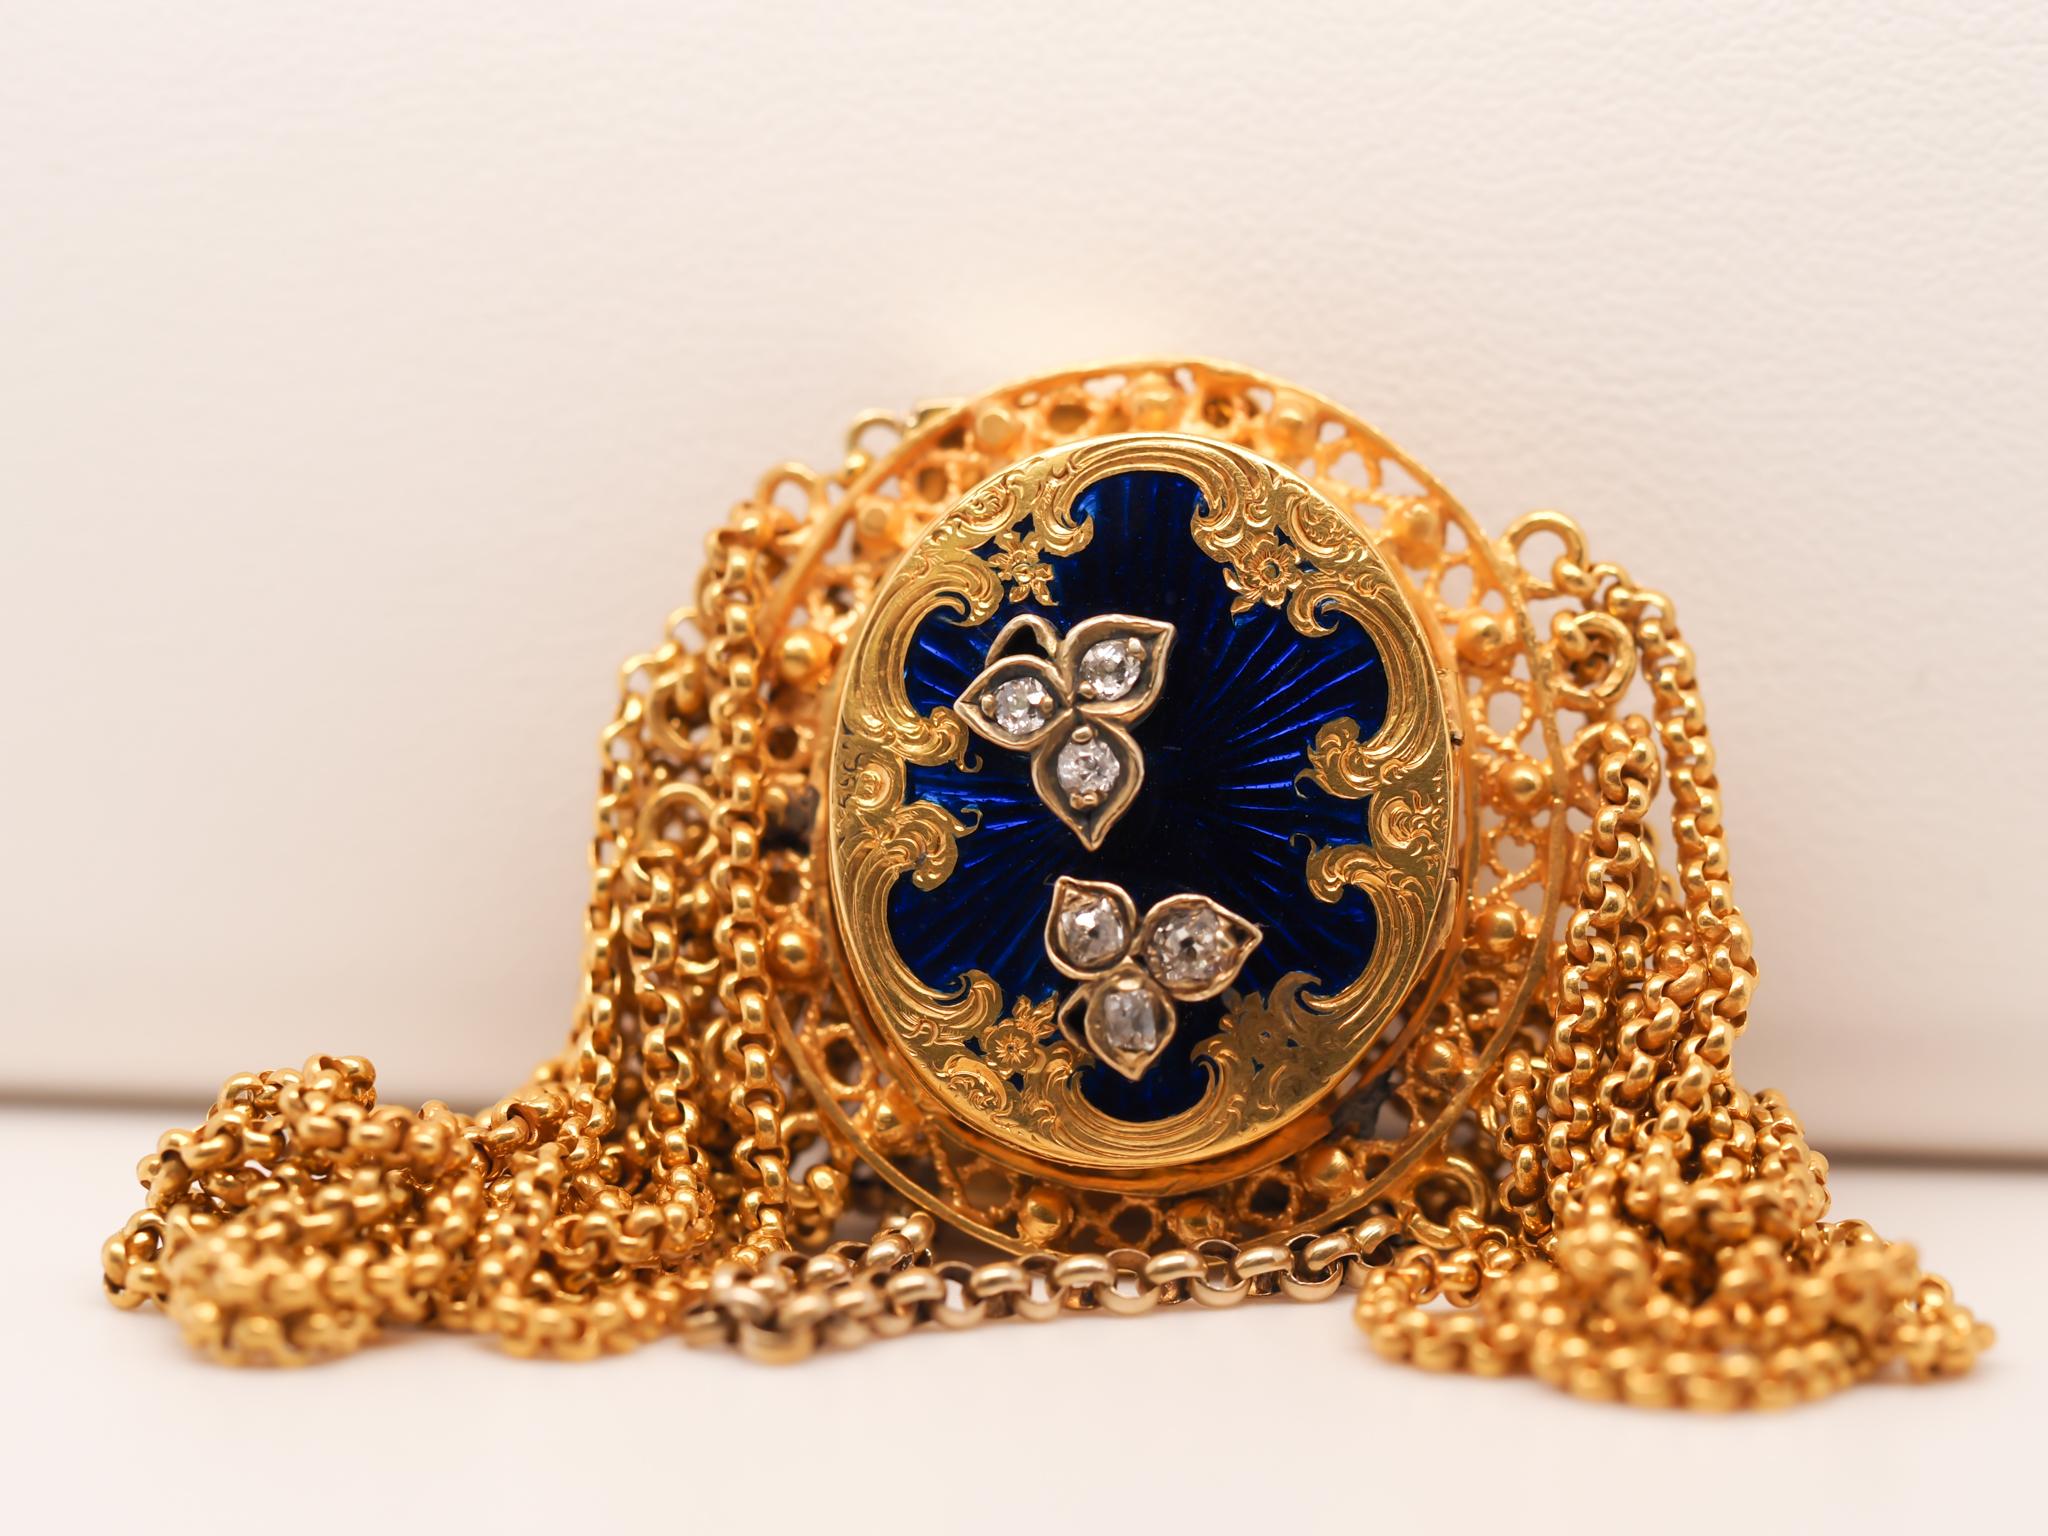 Edwardian Circa 1900s 18 Karat Yellow Gold Enamel and Diamond Secret Locket Bracelet